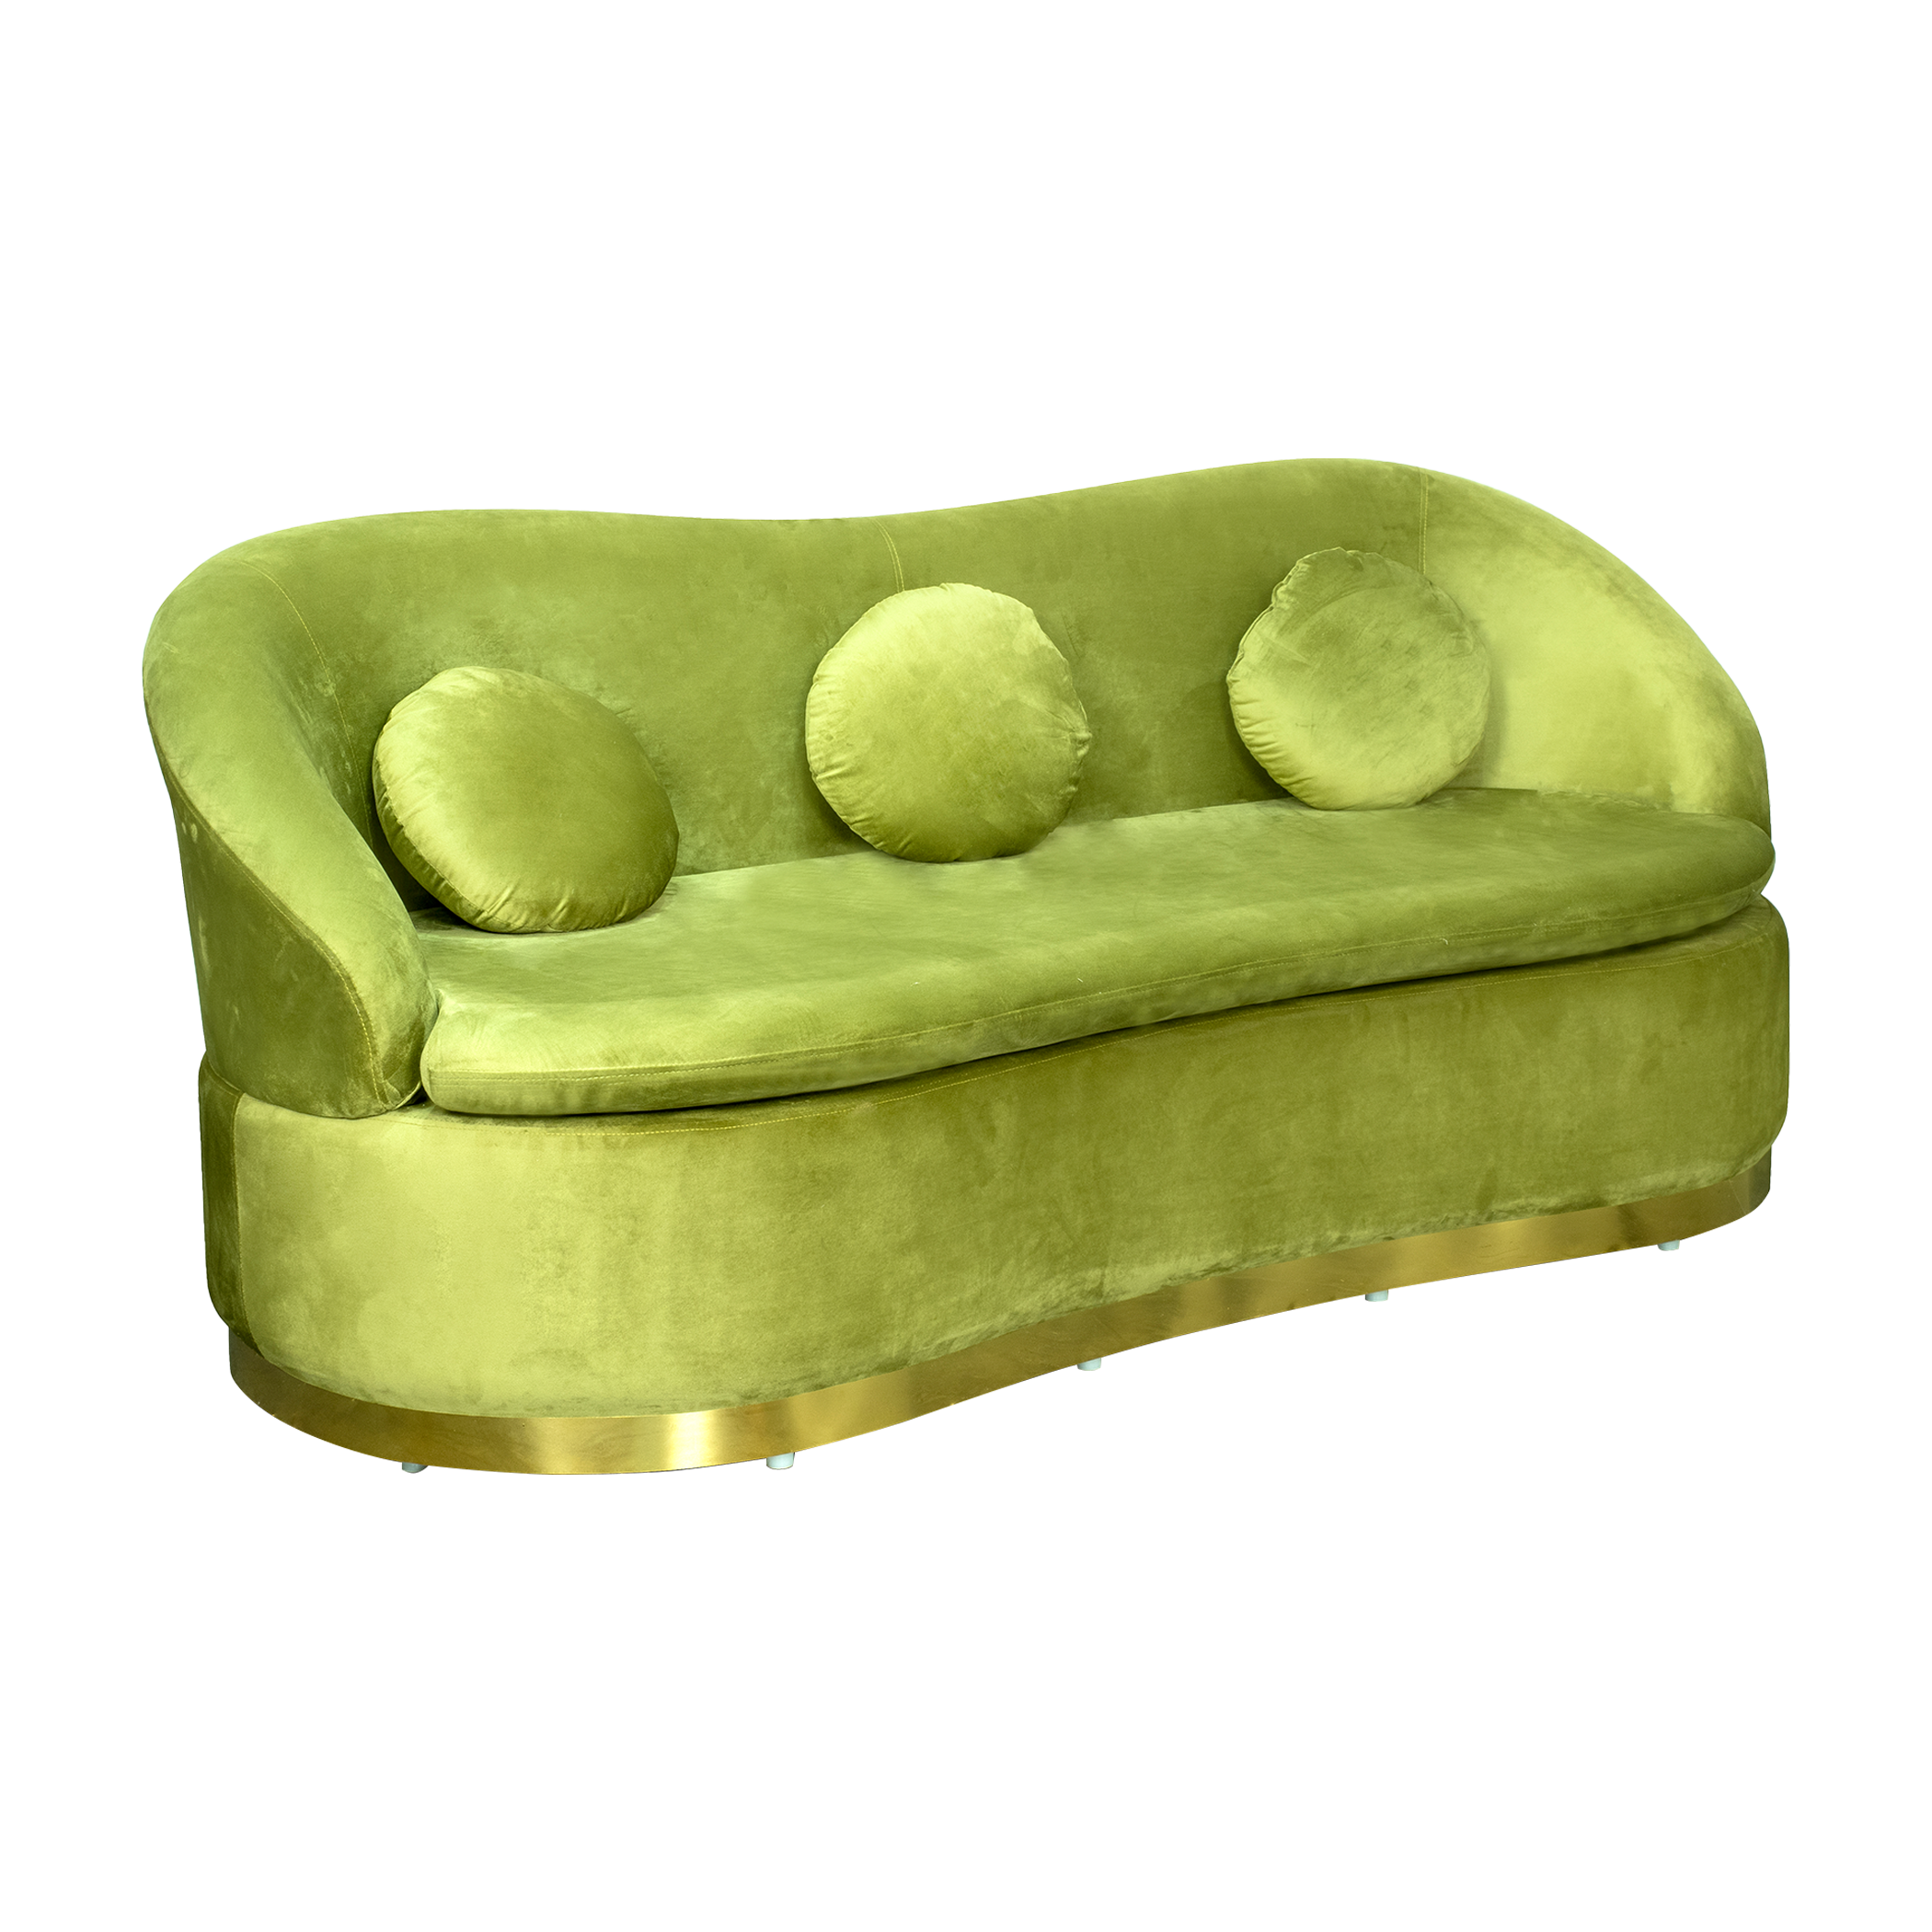 Pluto RoyalGreen 3S Sofa by Zorin Zorin